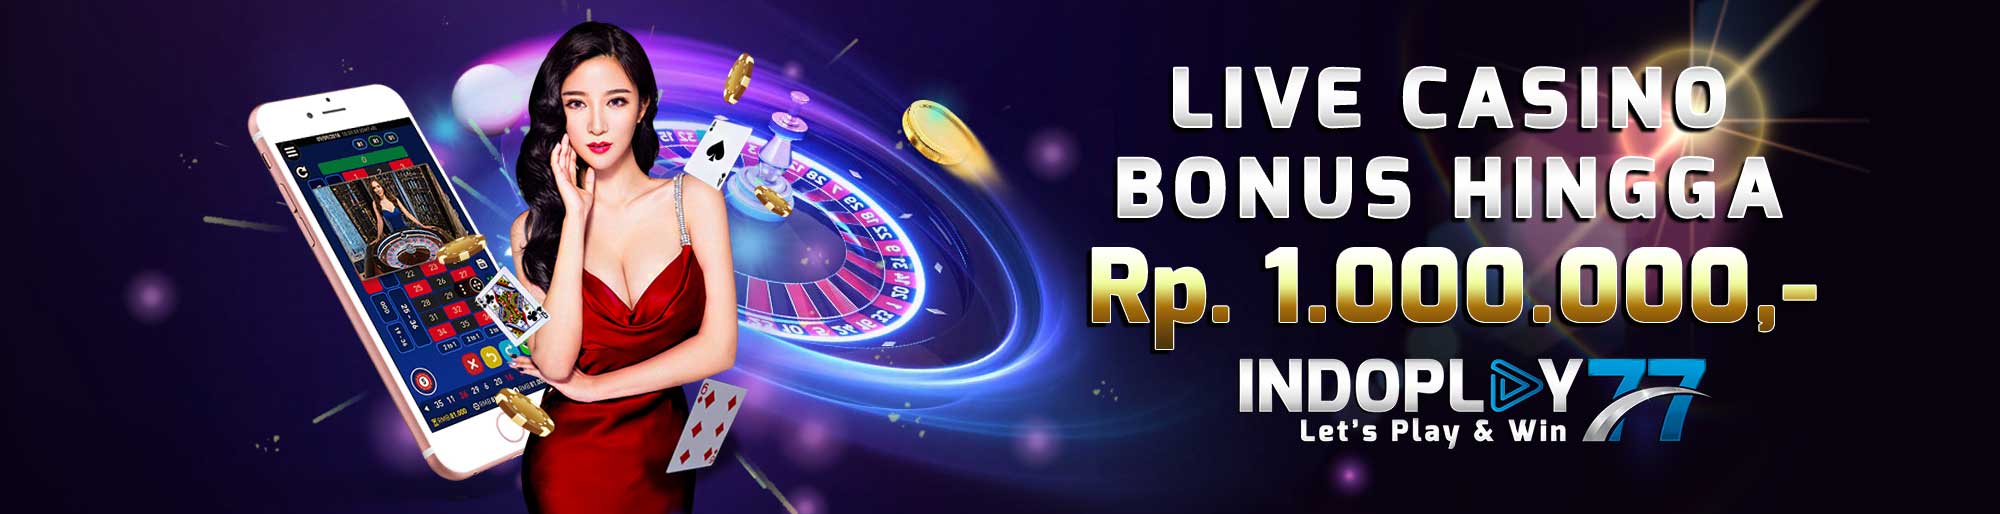 situs judi live-casino online sbobet maxbet m8bet cbo855 sexy baccarat indonesia